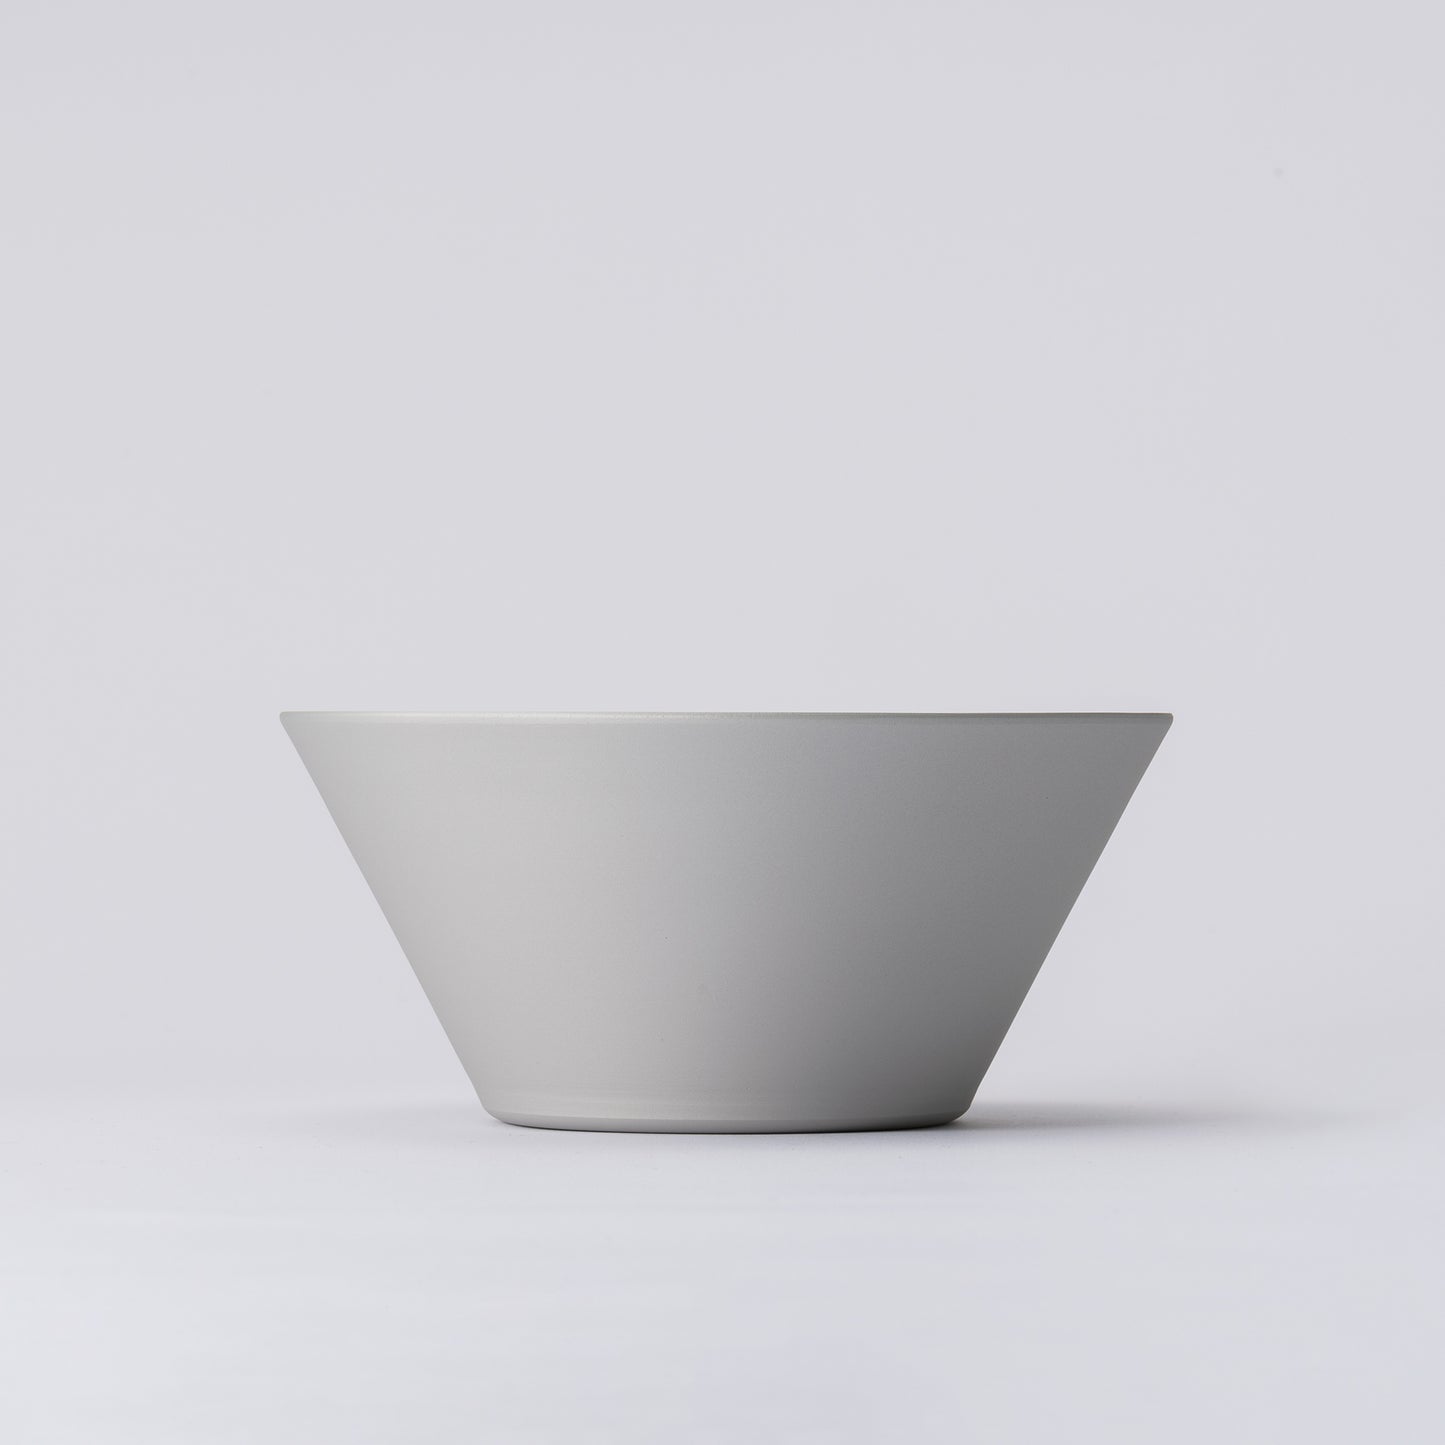 〈Limited〉KAMA-ASA Shoten x HEGE Set C (lid, bowl, mat)